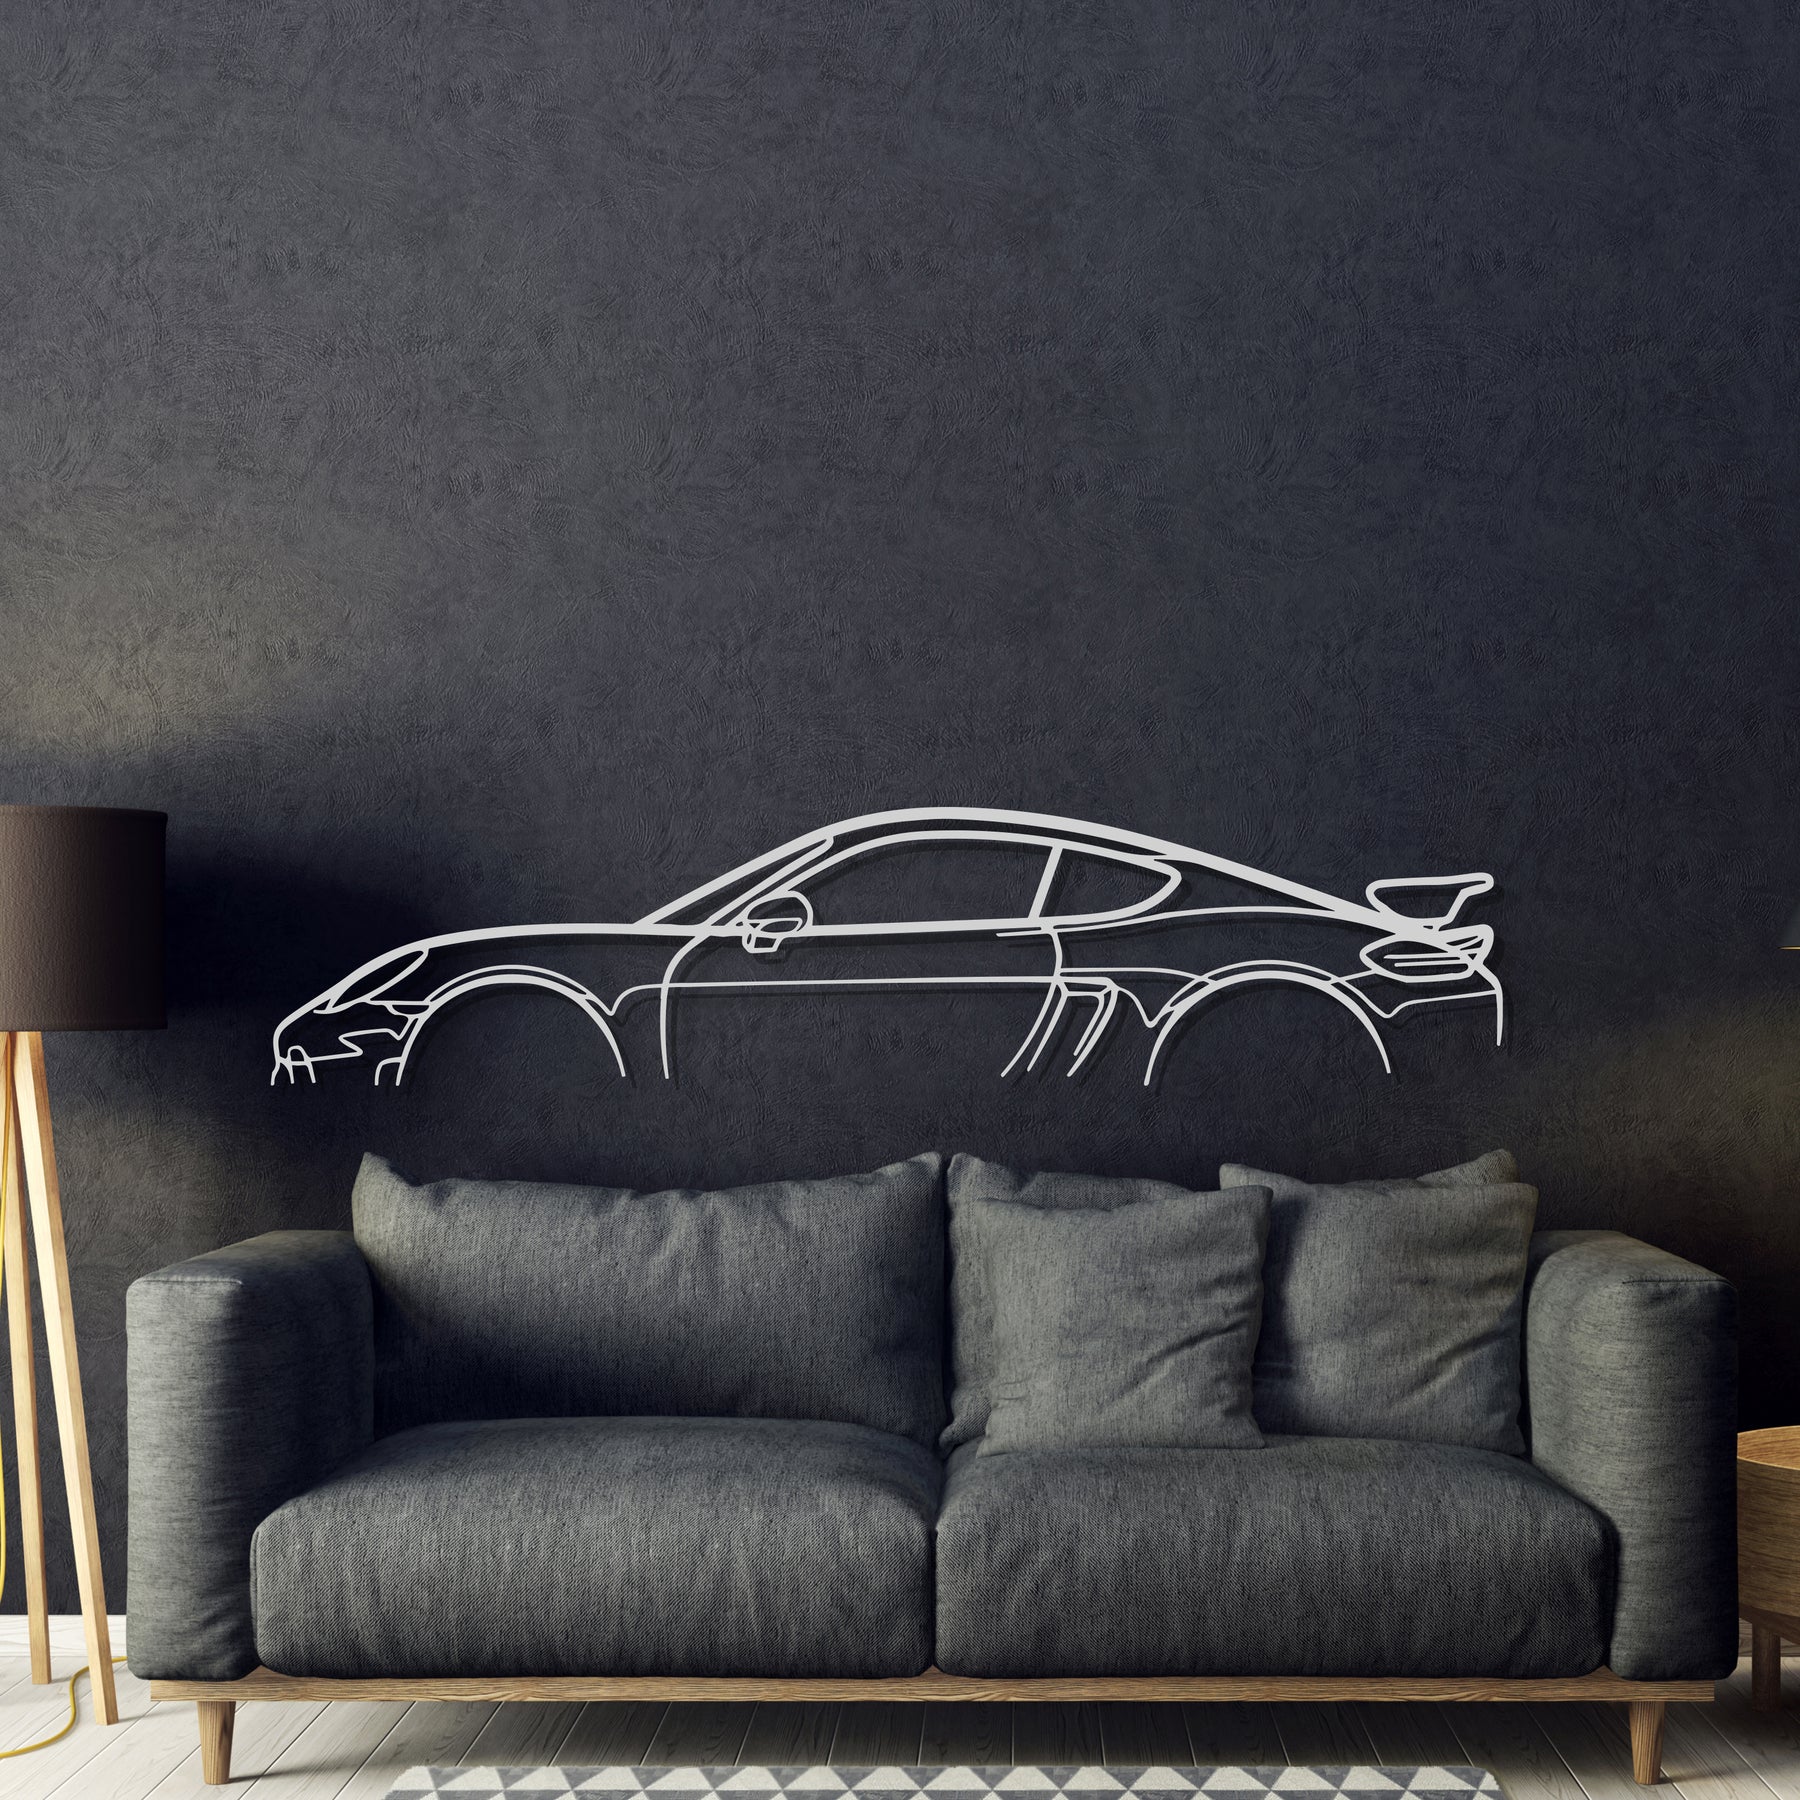 718 Cayman GT4 Metal Car Wall Art - MT0840